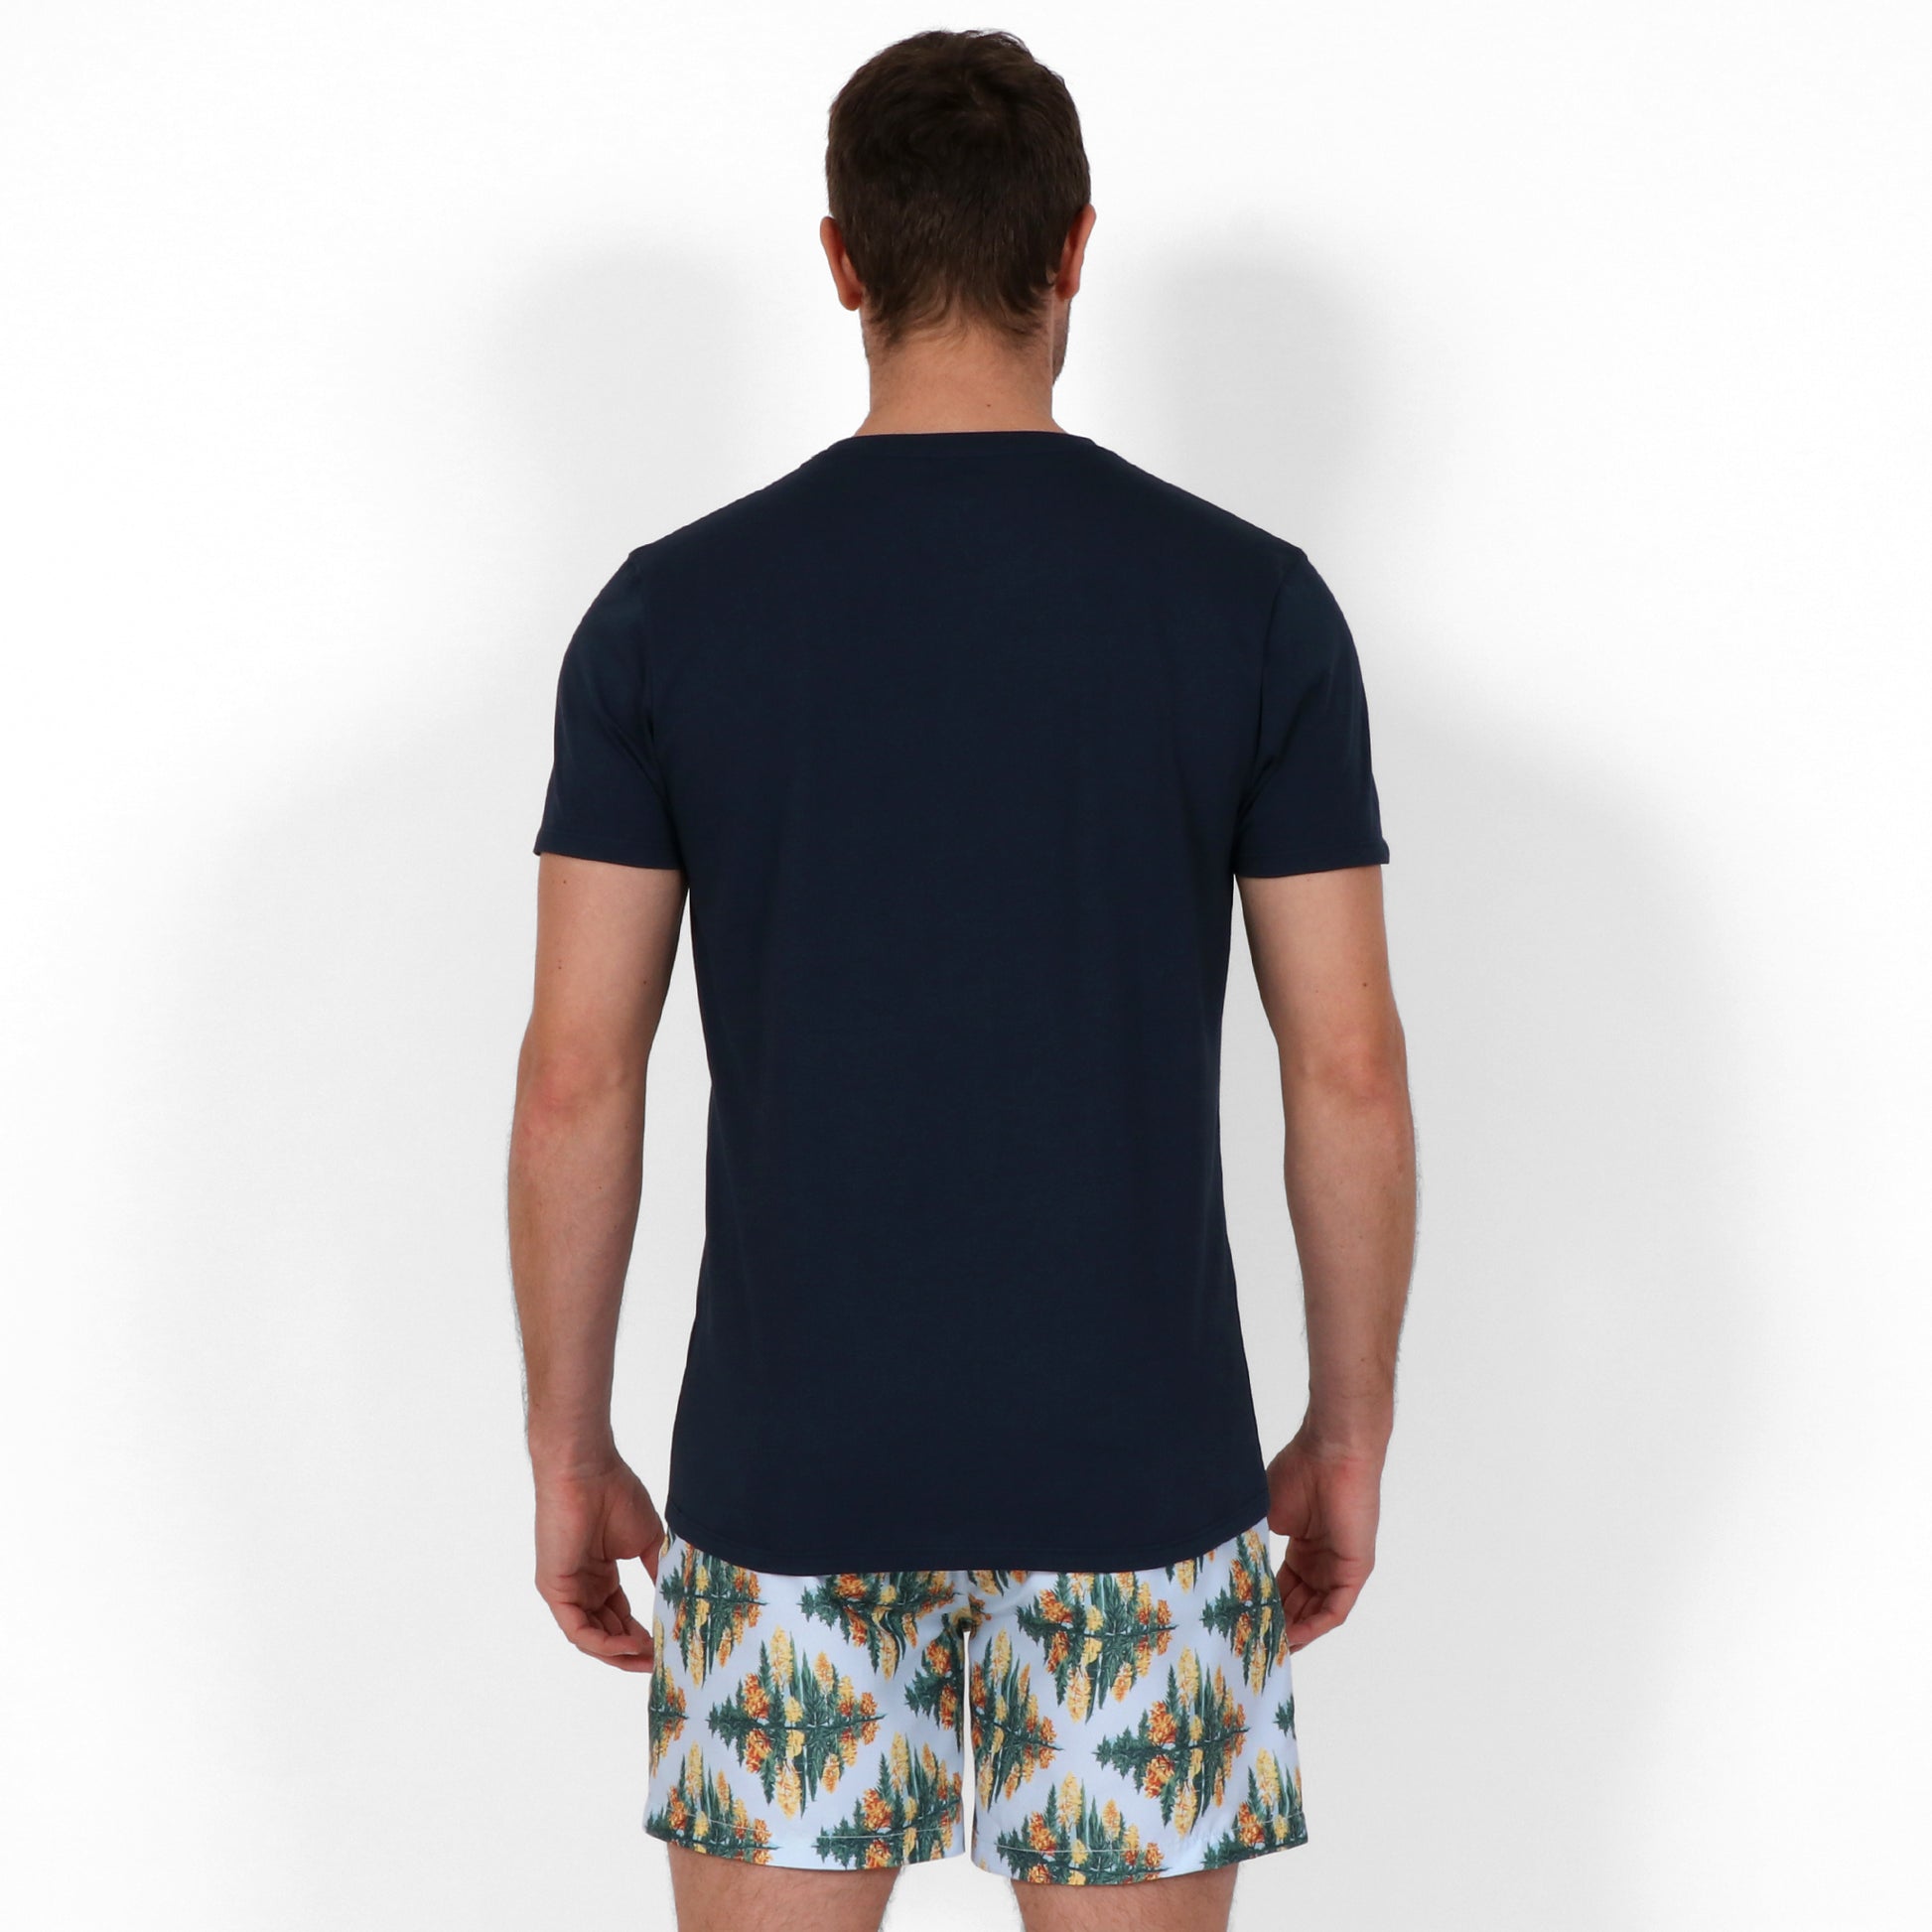 Original Weekend Organic Cotton Men's Urban Fit T-Shirt in Navy on Body Back View